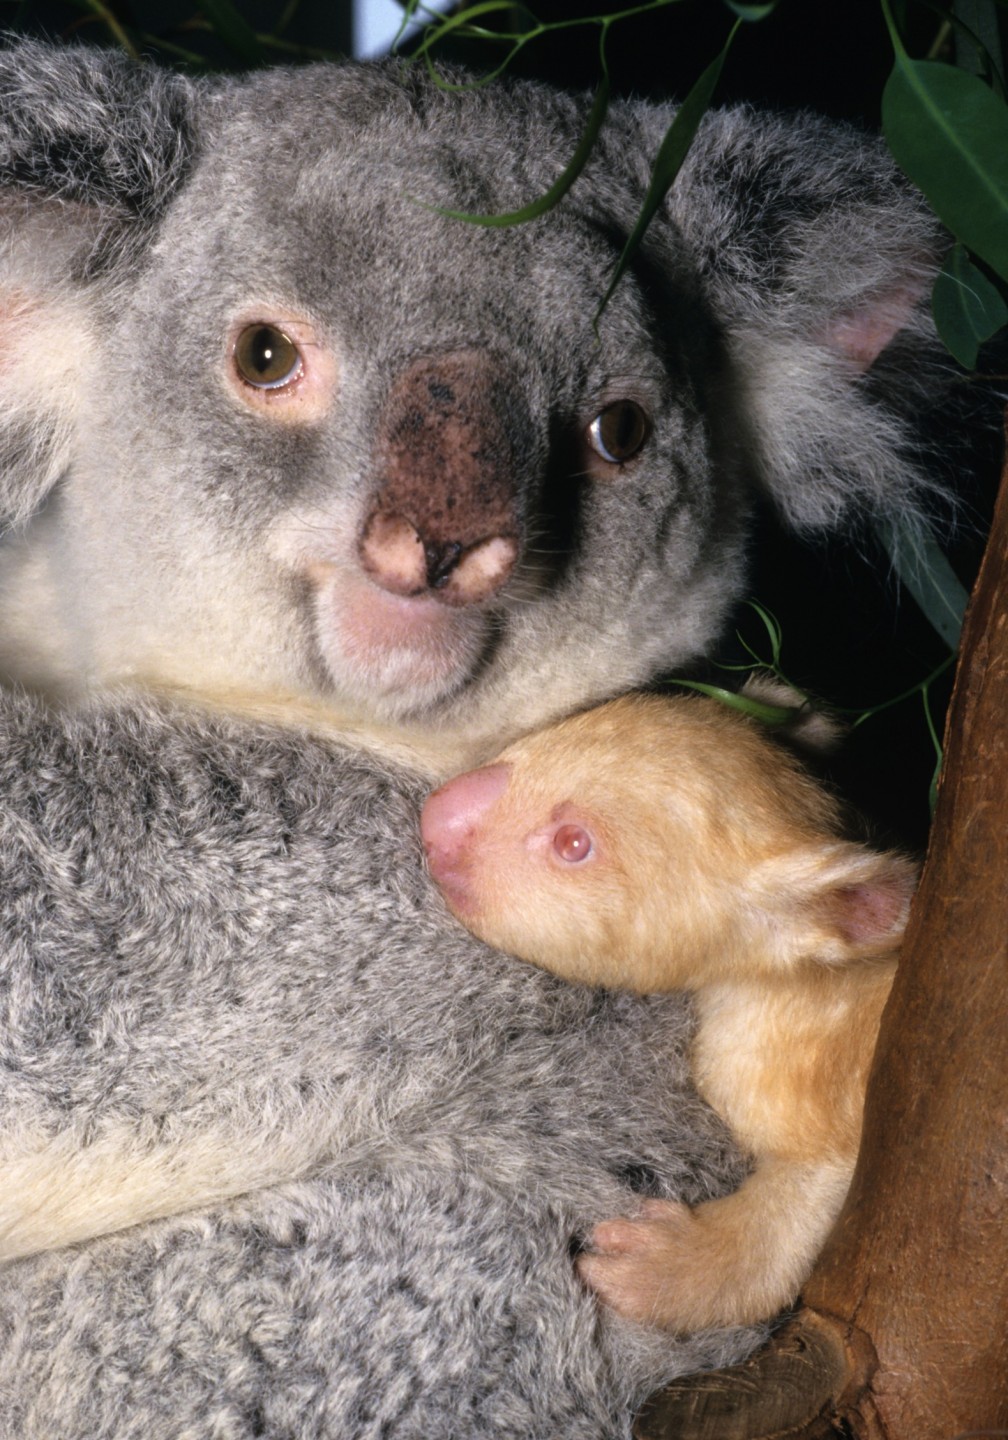 The Zoo's second albino koala was named Onya-Birri, meaning 